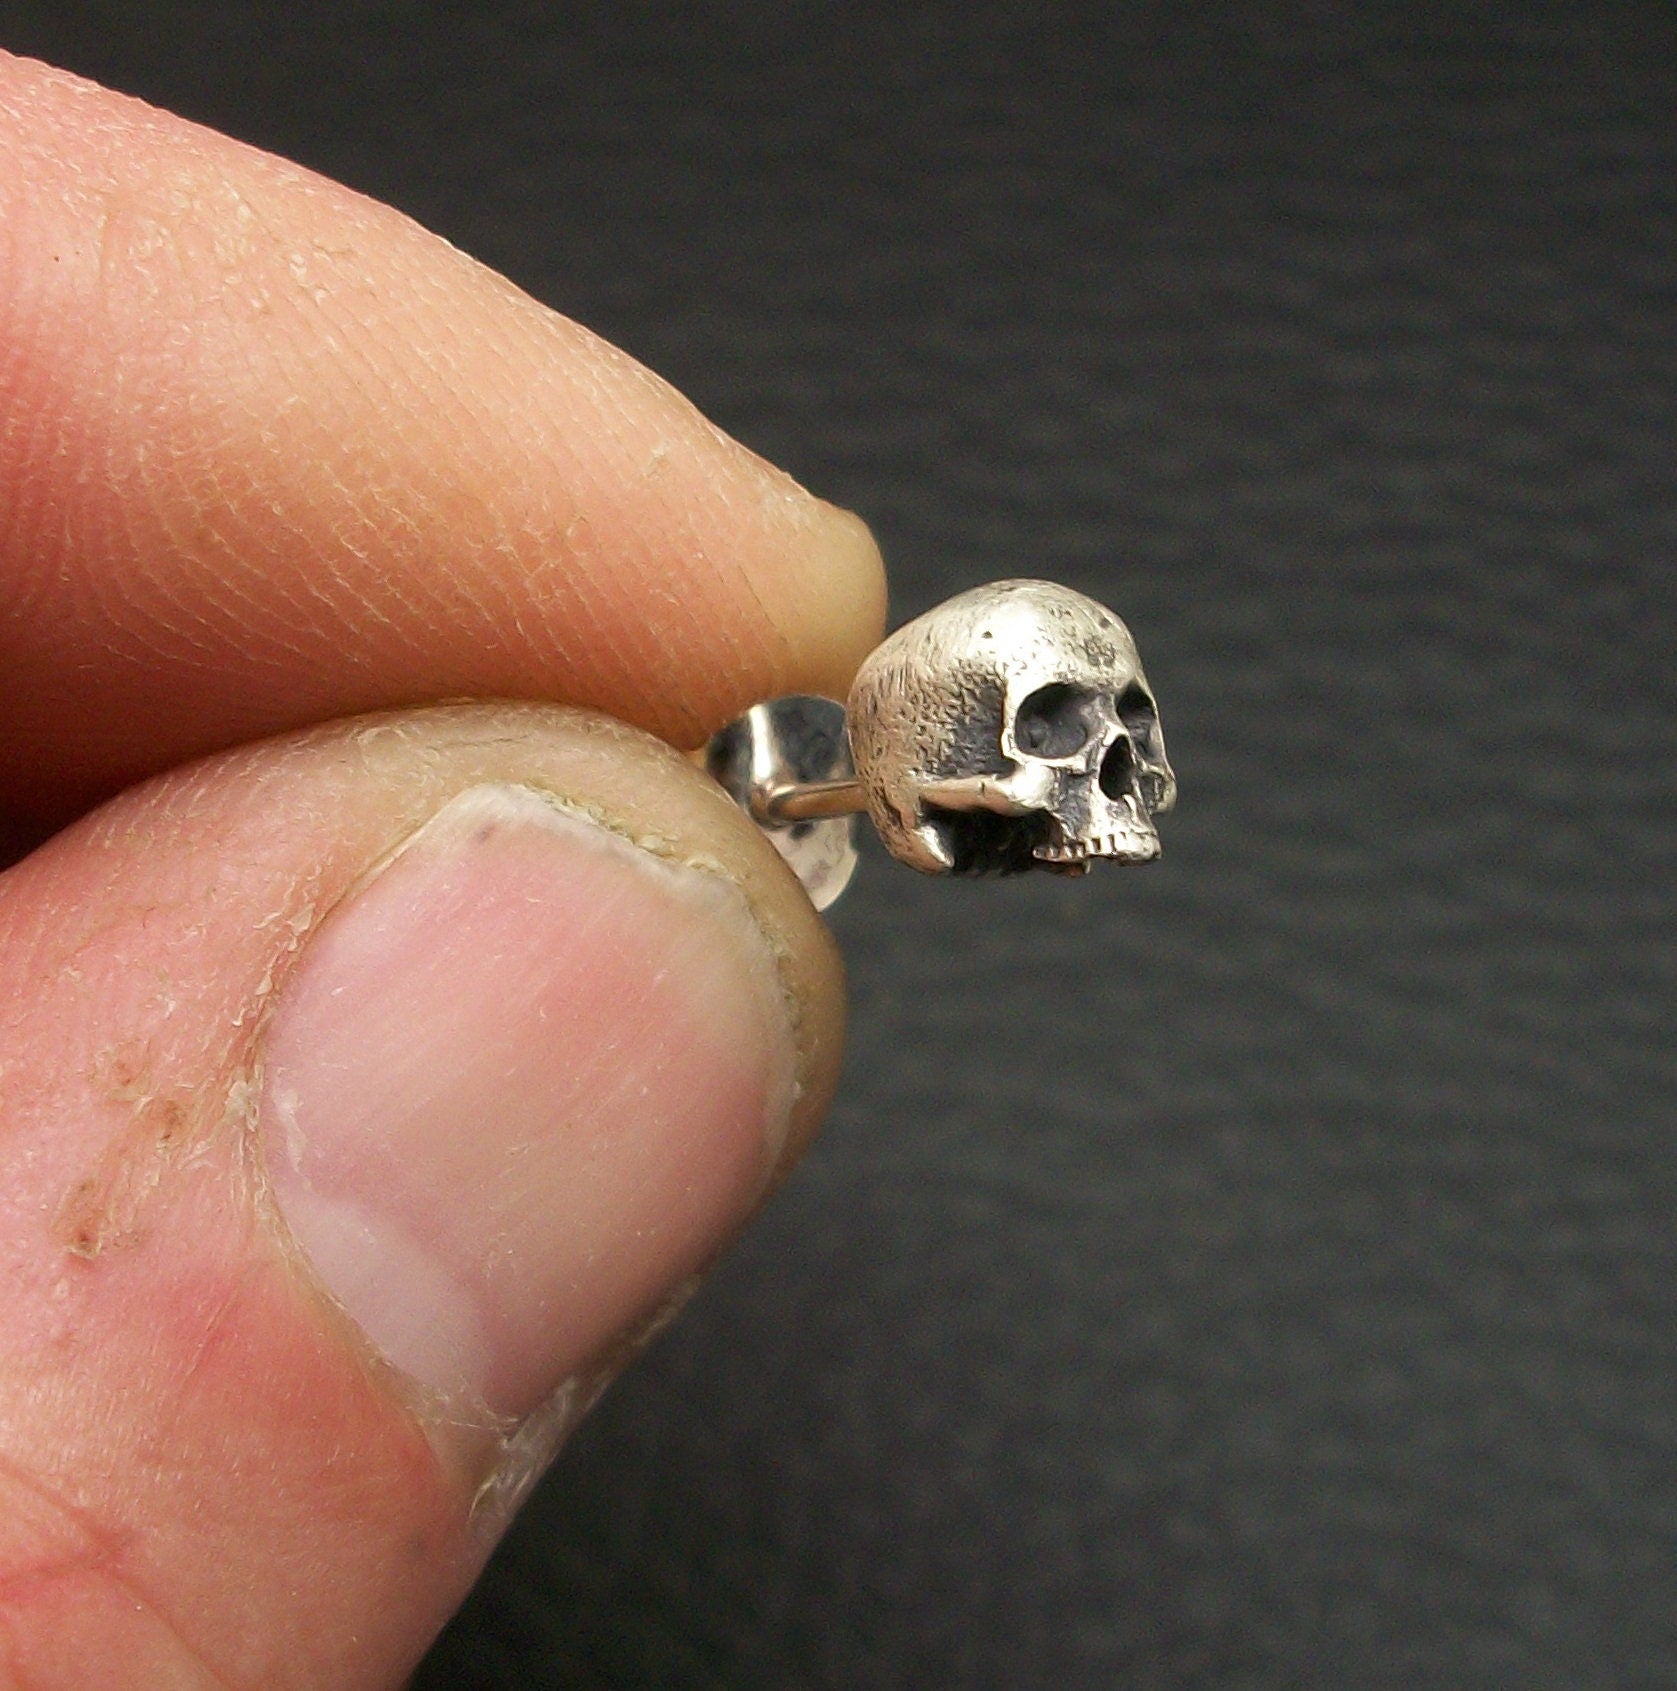 Skull Earrings - Sterling Silver Stud Skull Earrings - Love to Death Earrings (the pair)